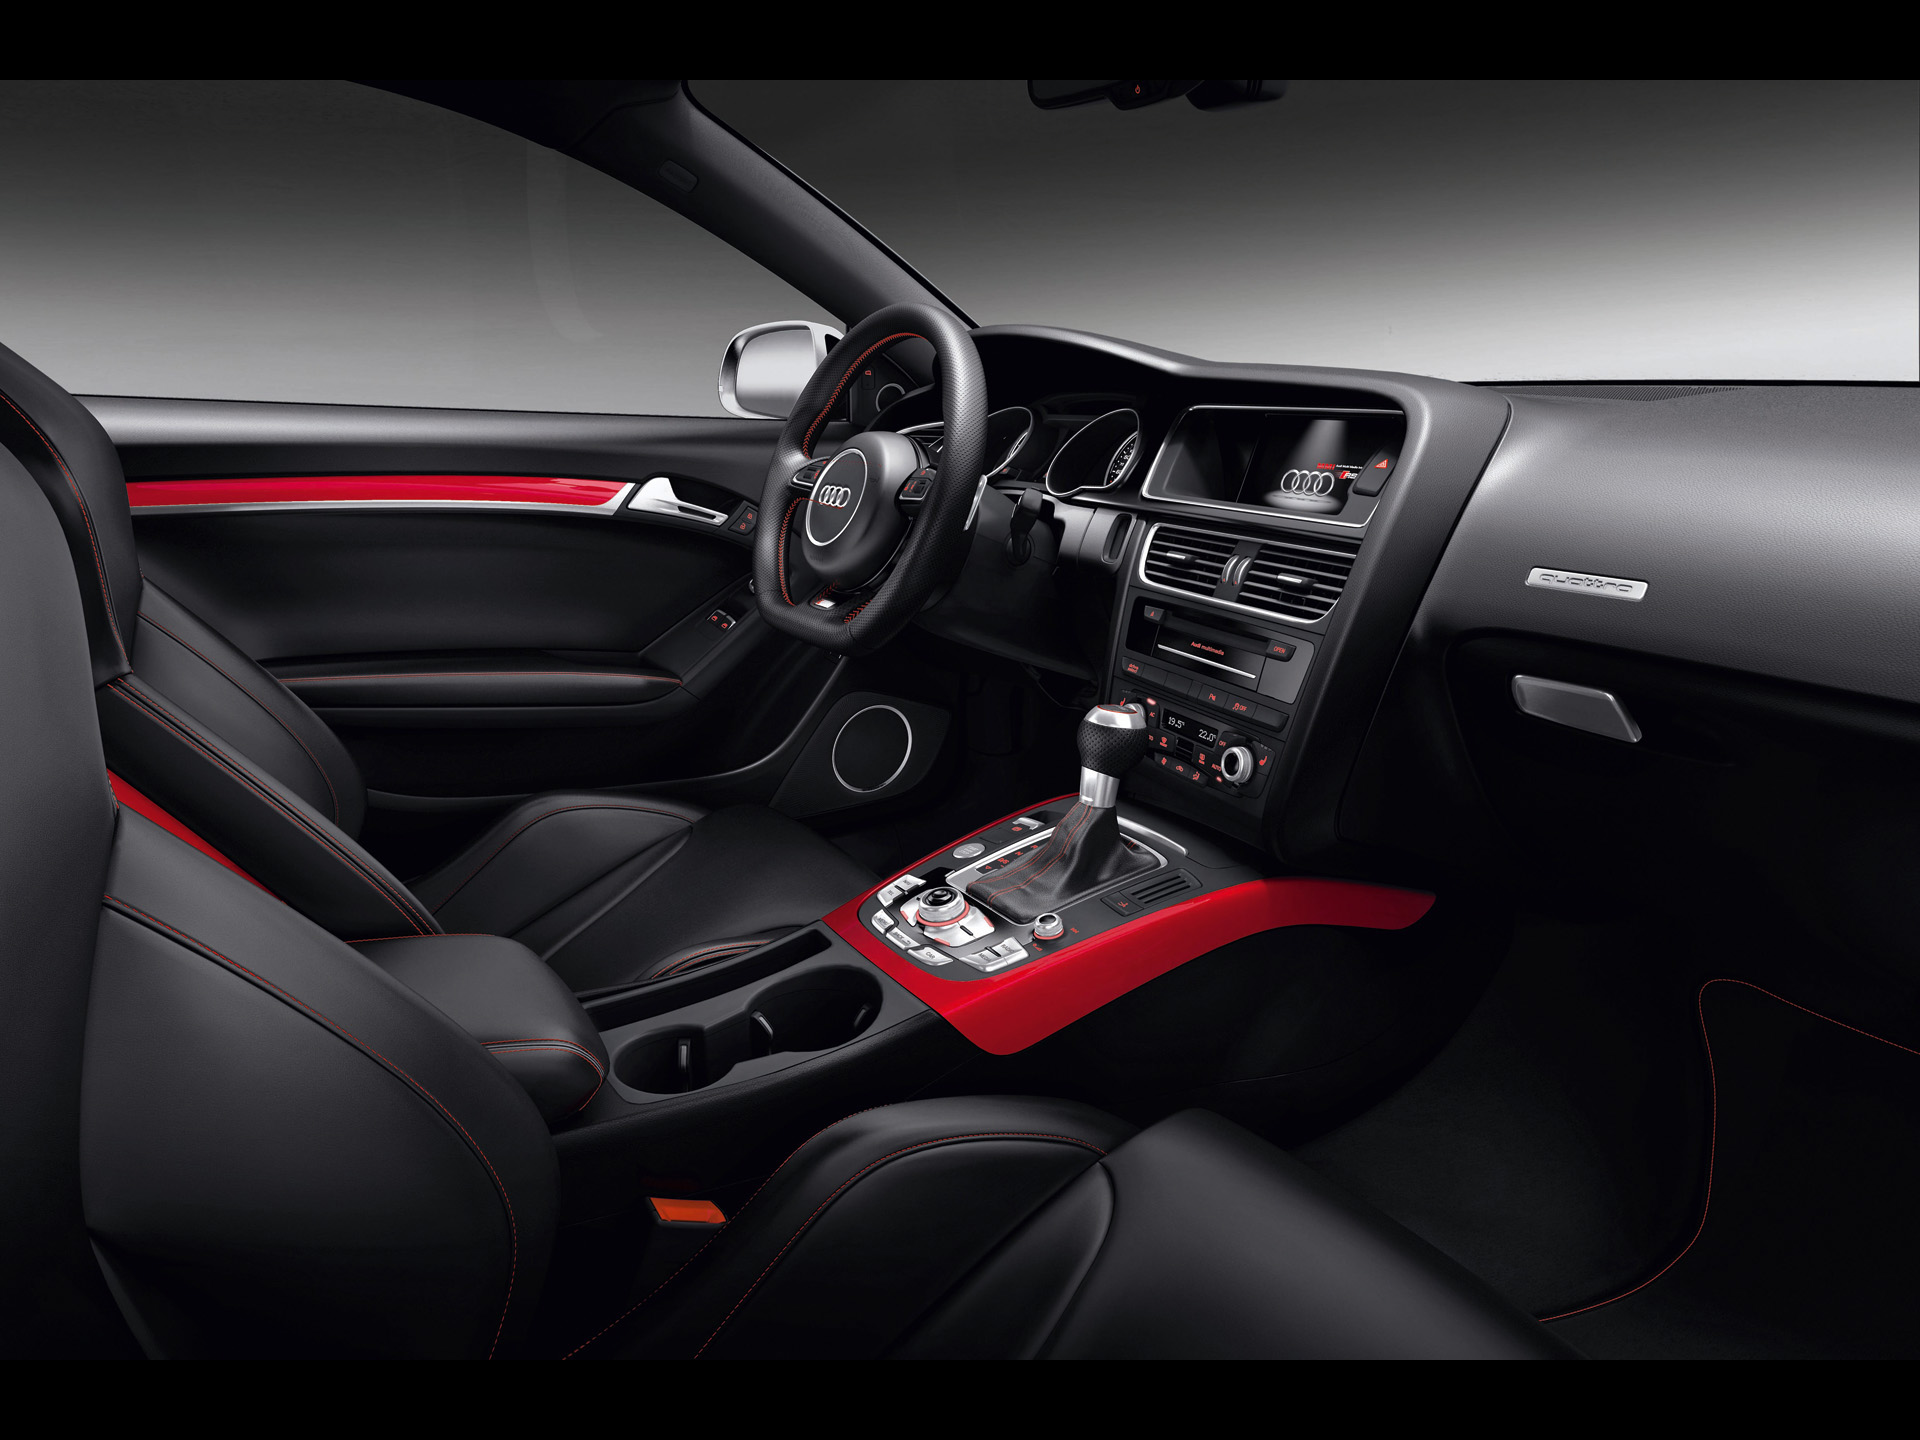 Audi RS5 Interior wallpaper. Audi RS5 Interior